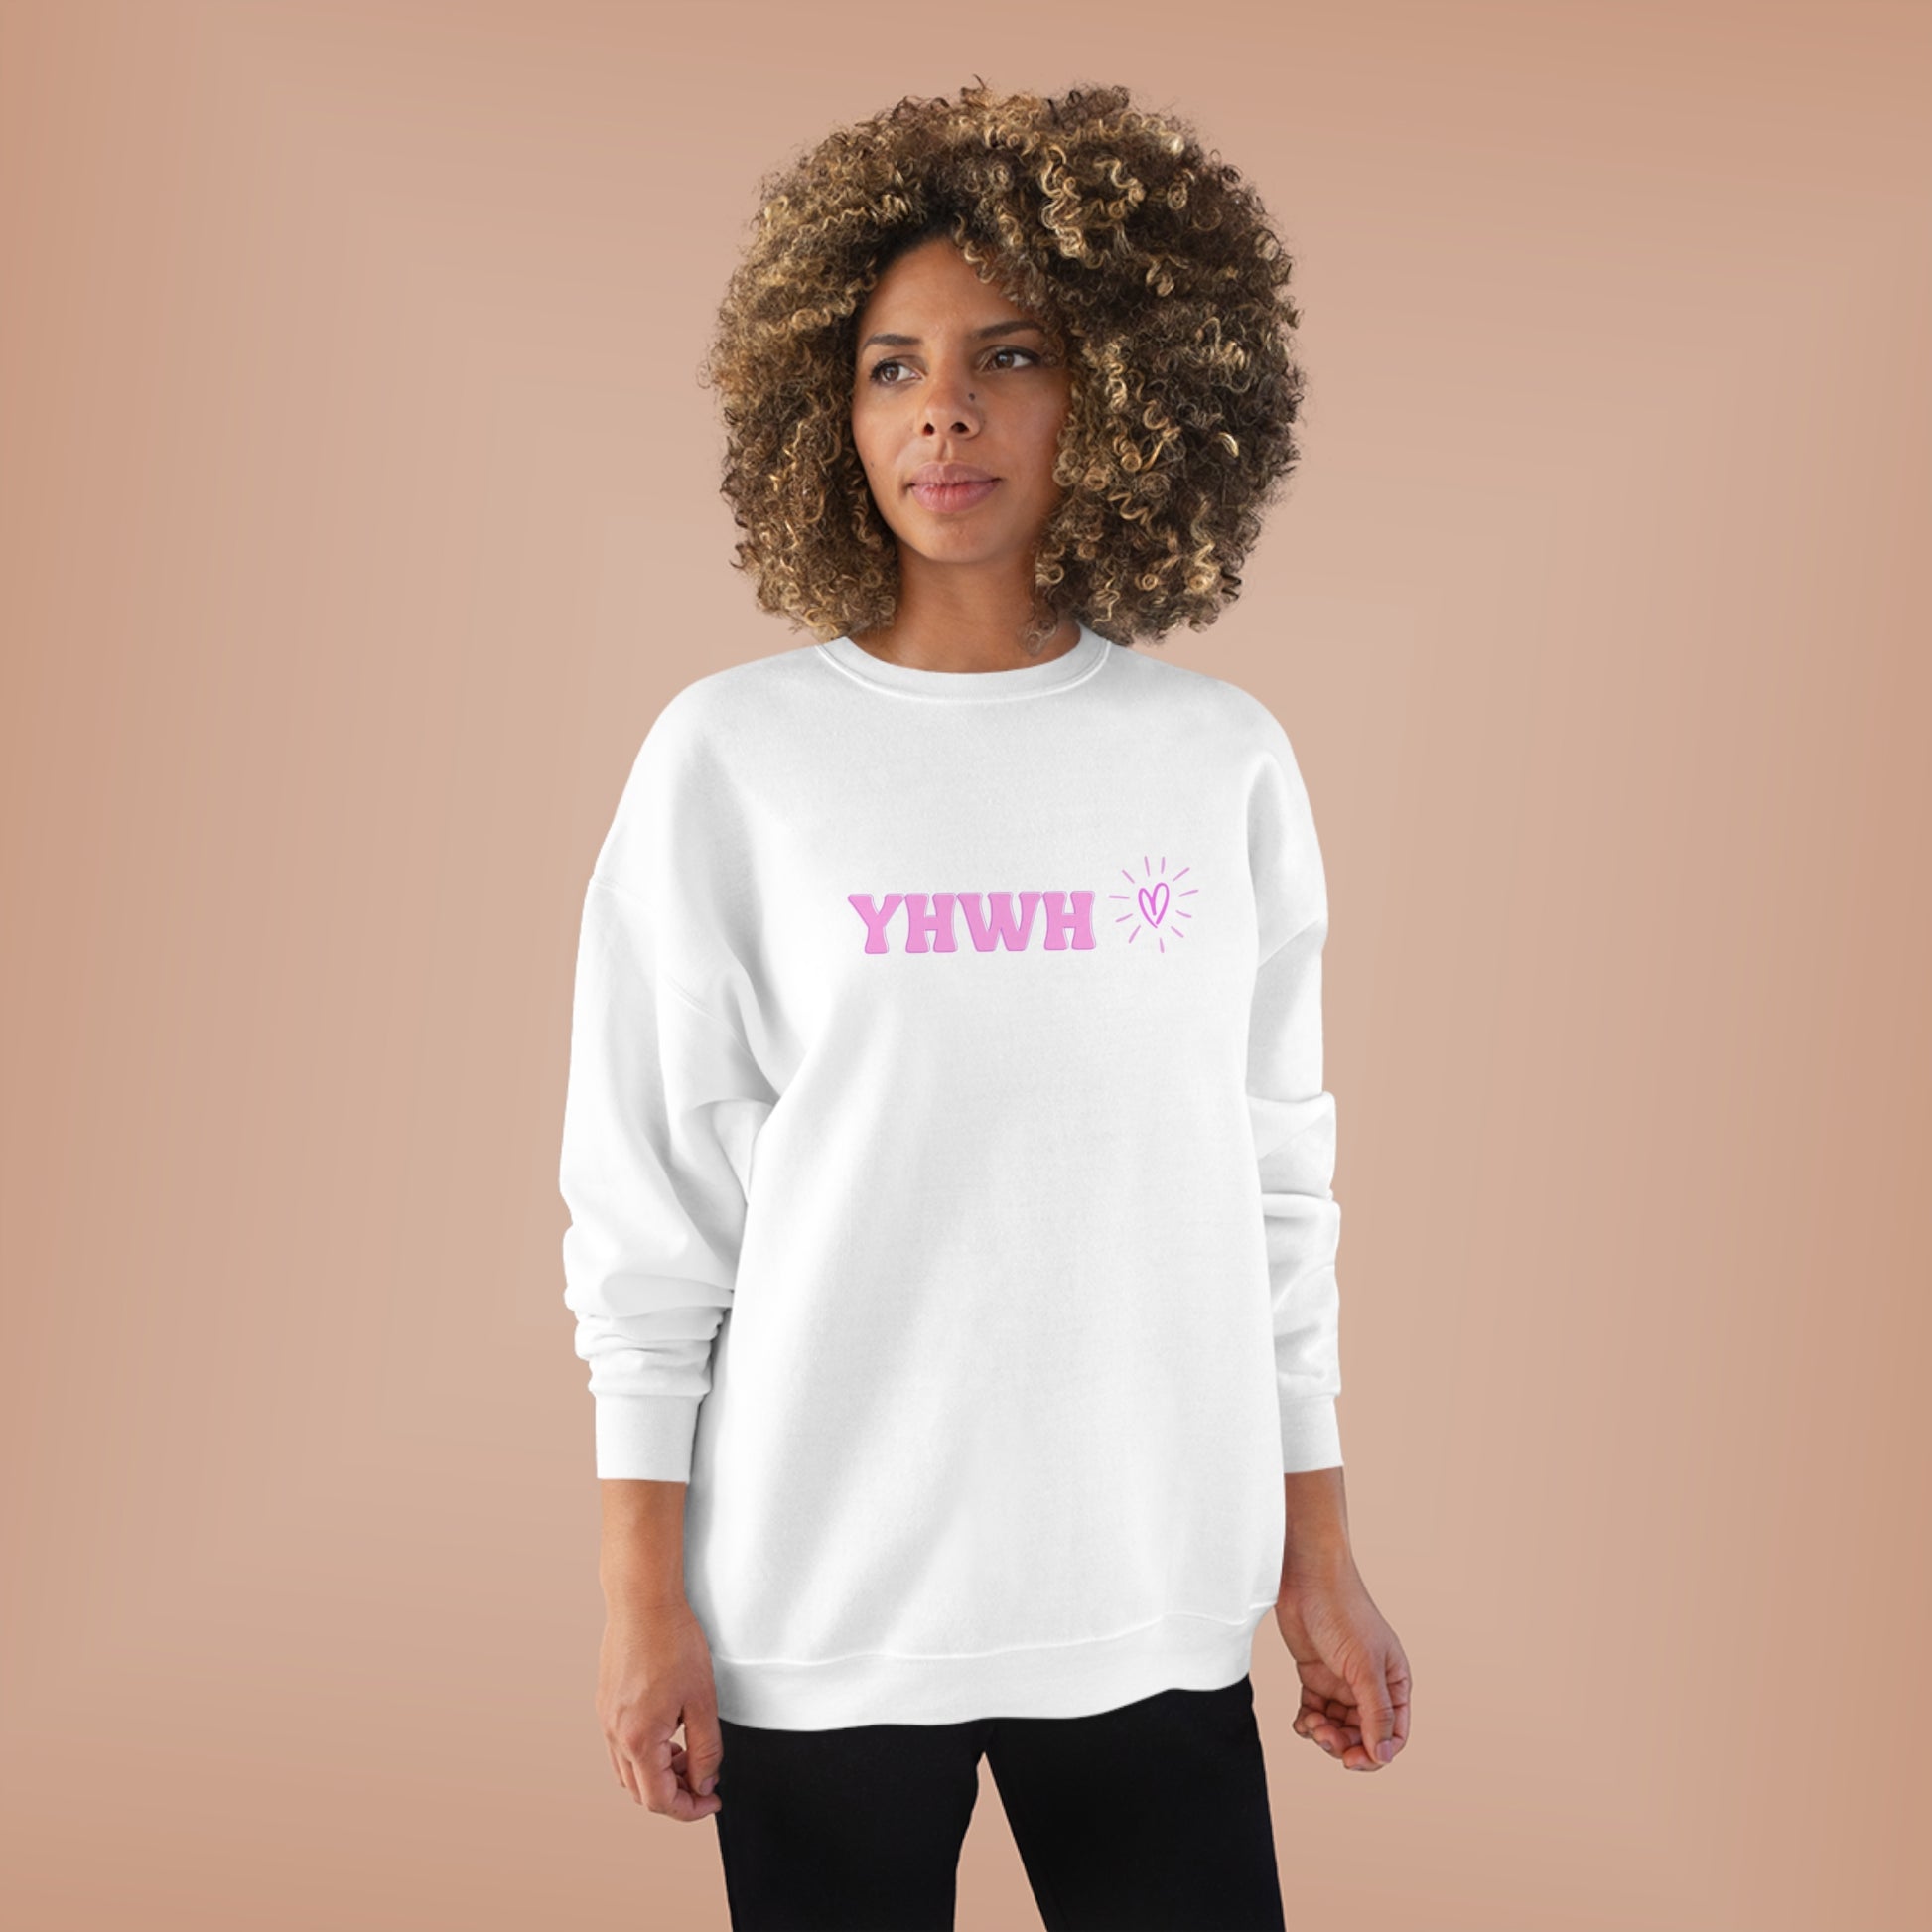 YHWH Crewneck Sweatshirt - Friends of the Faith